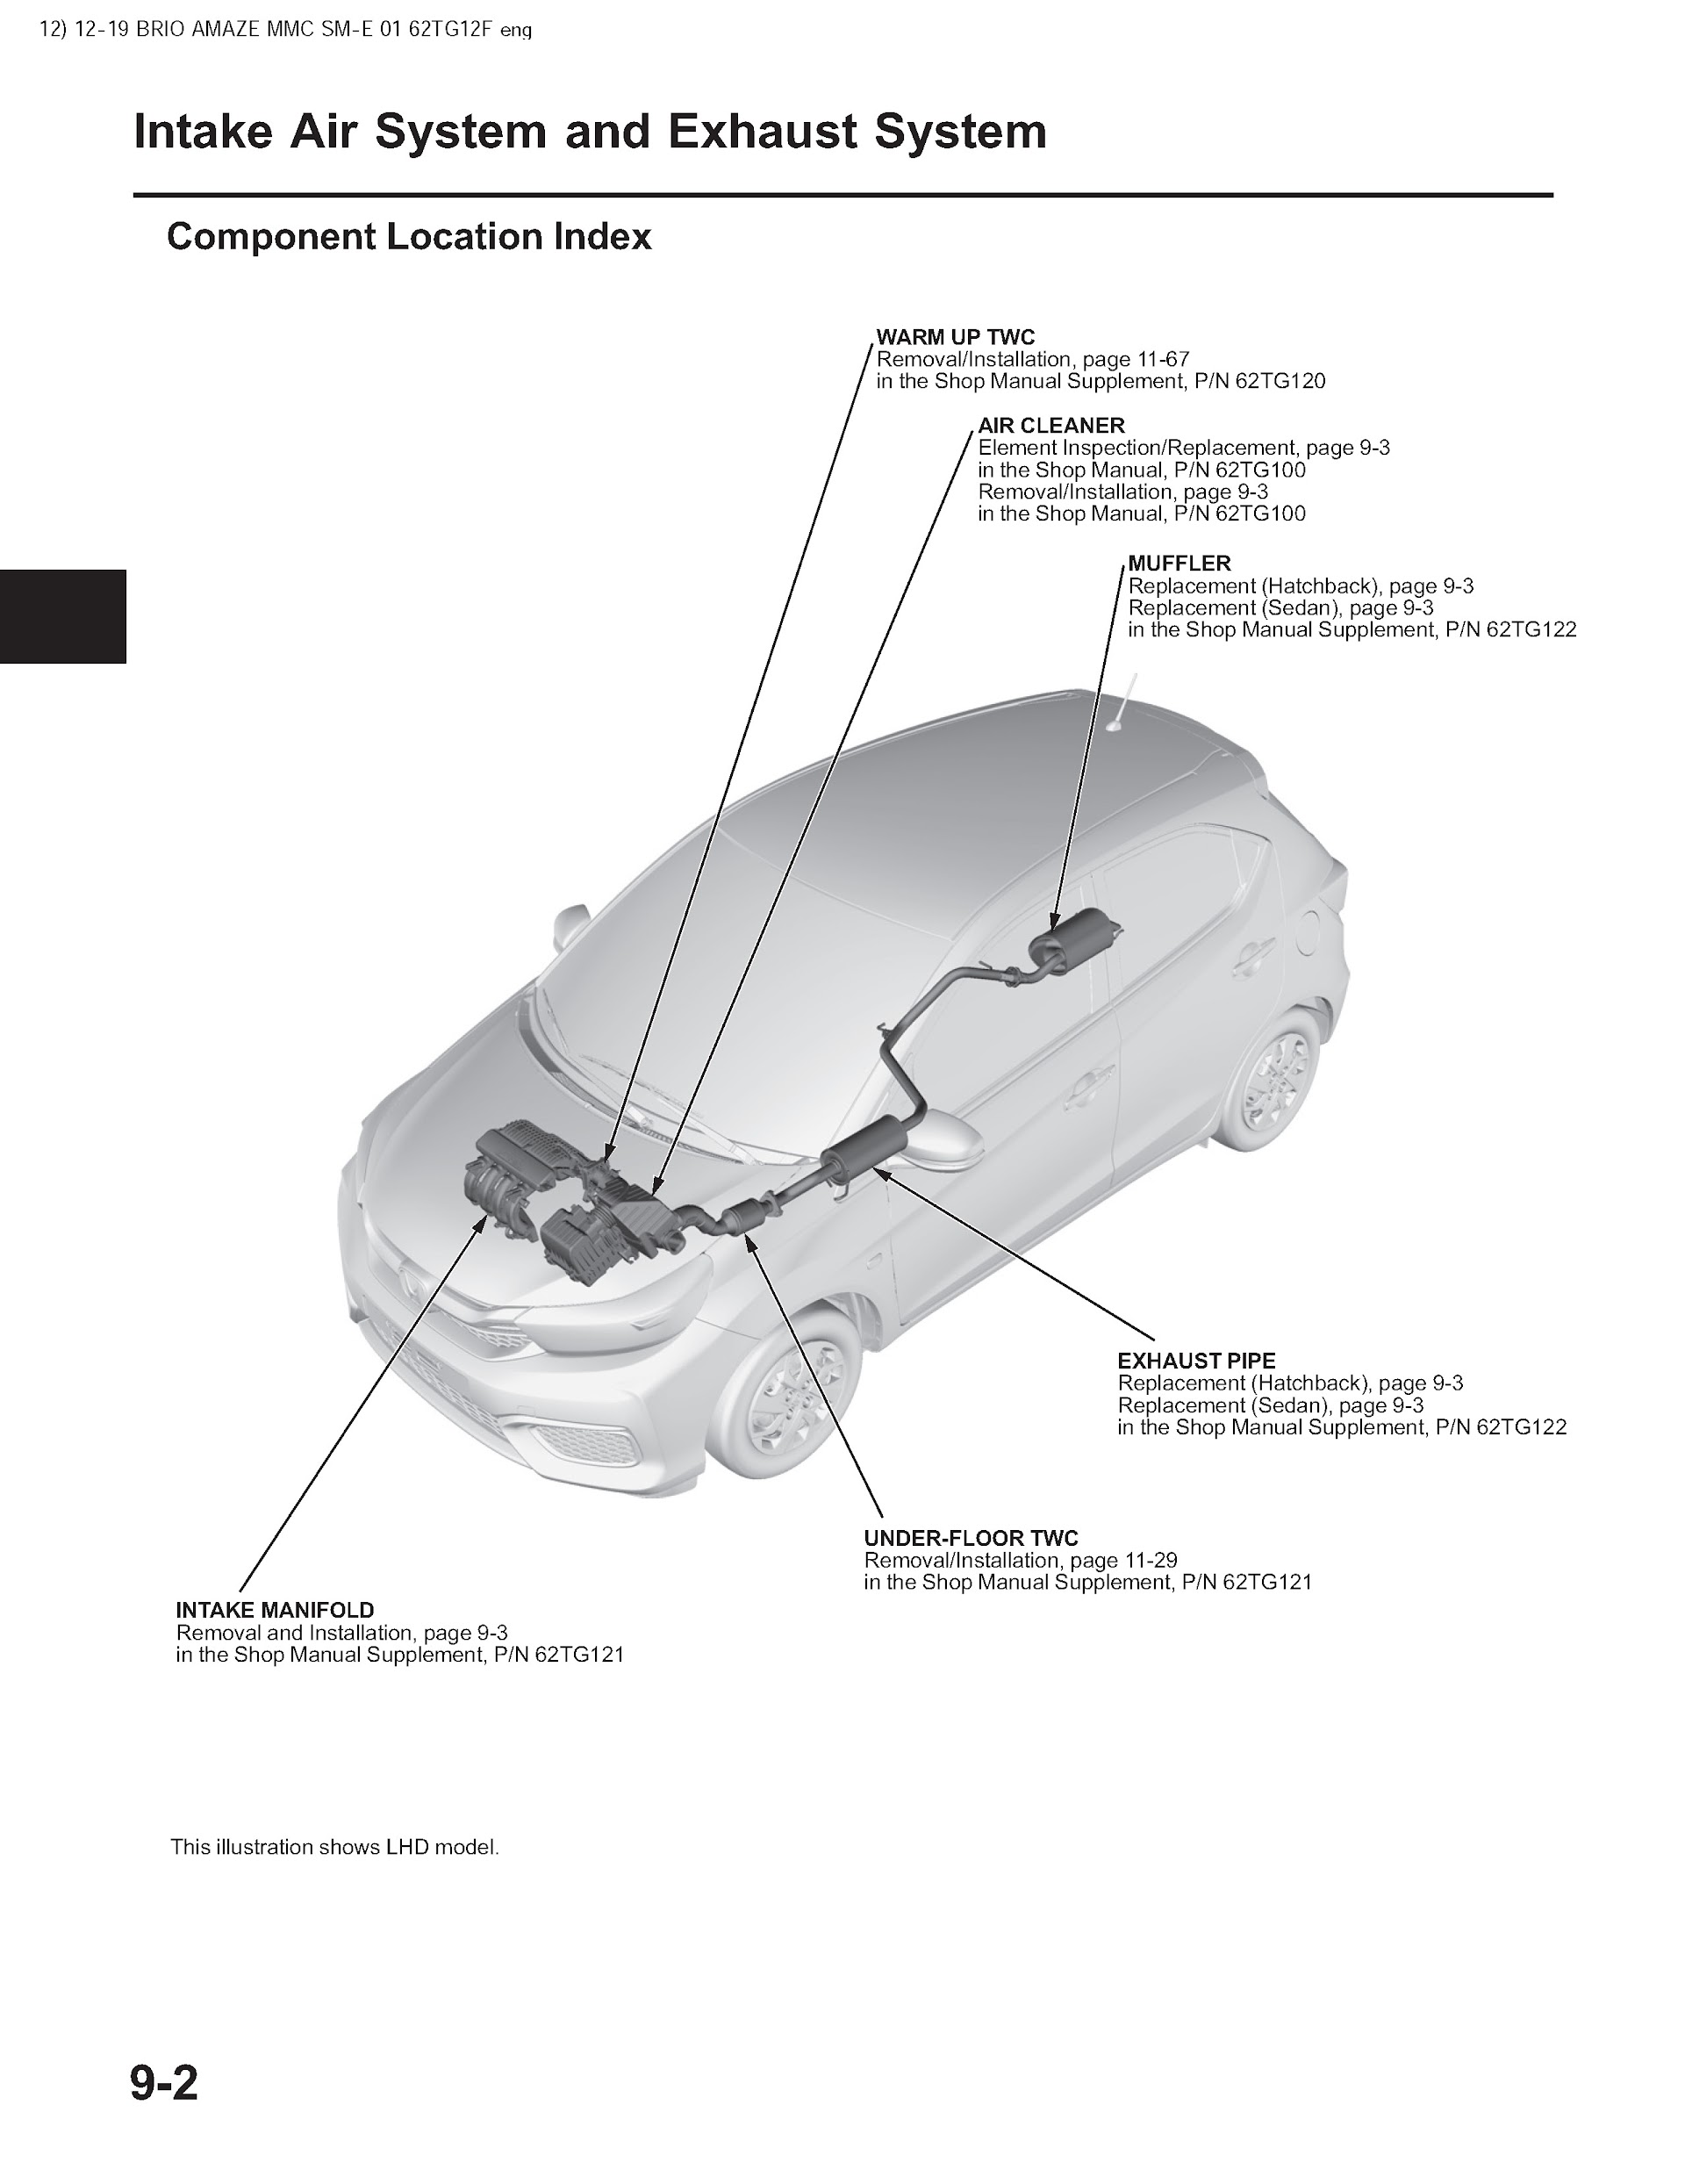 2012-2020 Honda Brio Repair Manual